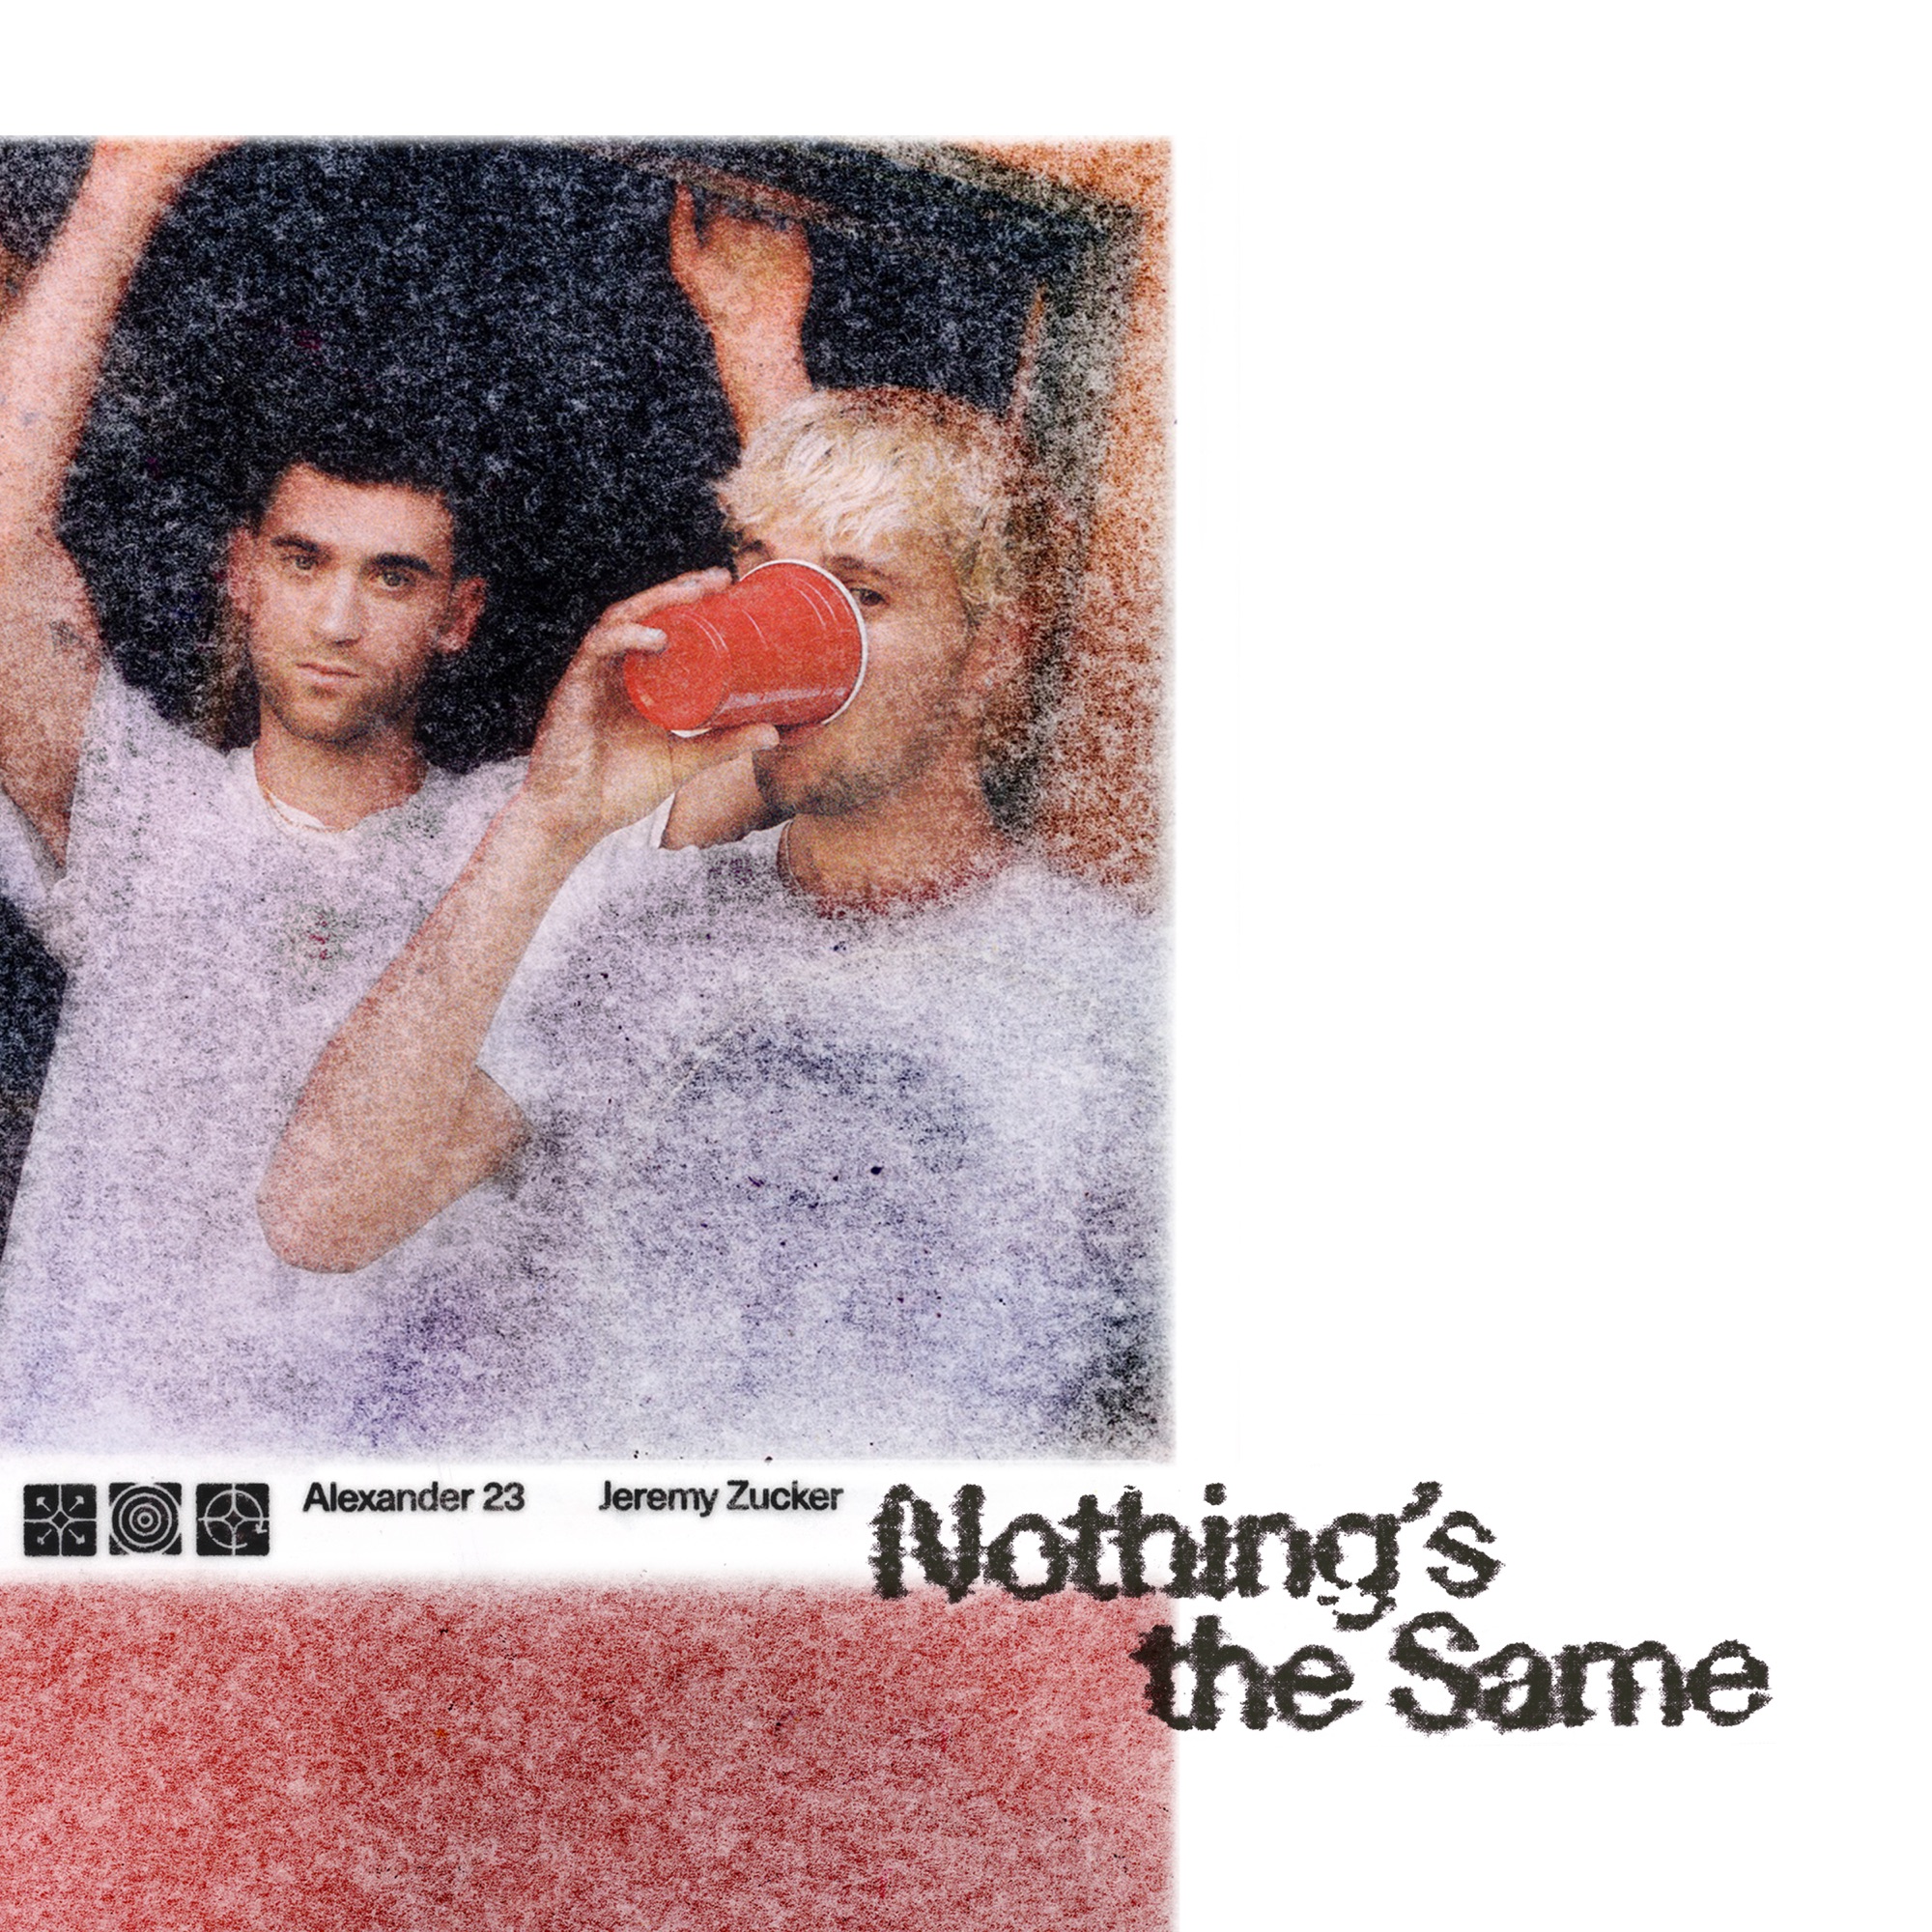 Alexander 23 & Jeremy Zucker - Nothing's the Same - Single